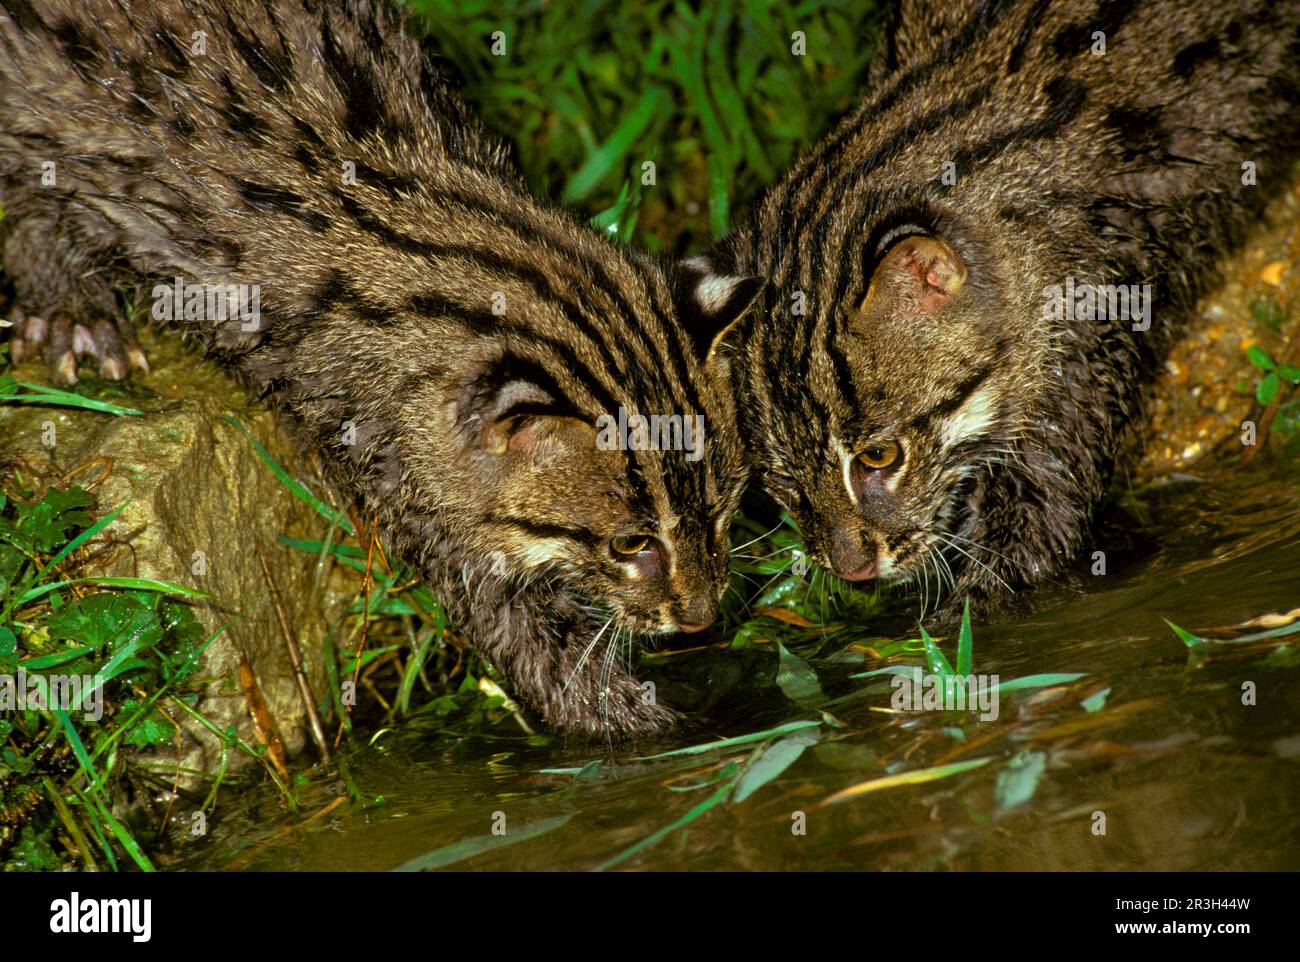 Prionailurus viverrina, Felis viverrinus, Fishing cat, fishing cats (Prionailurus viverrinus), Predatory cats, Predators, Mammals, Animals, Fishing Stock Photo